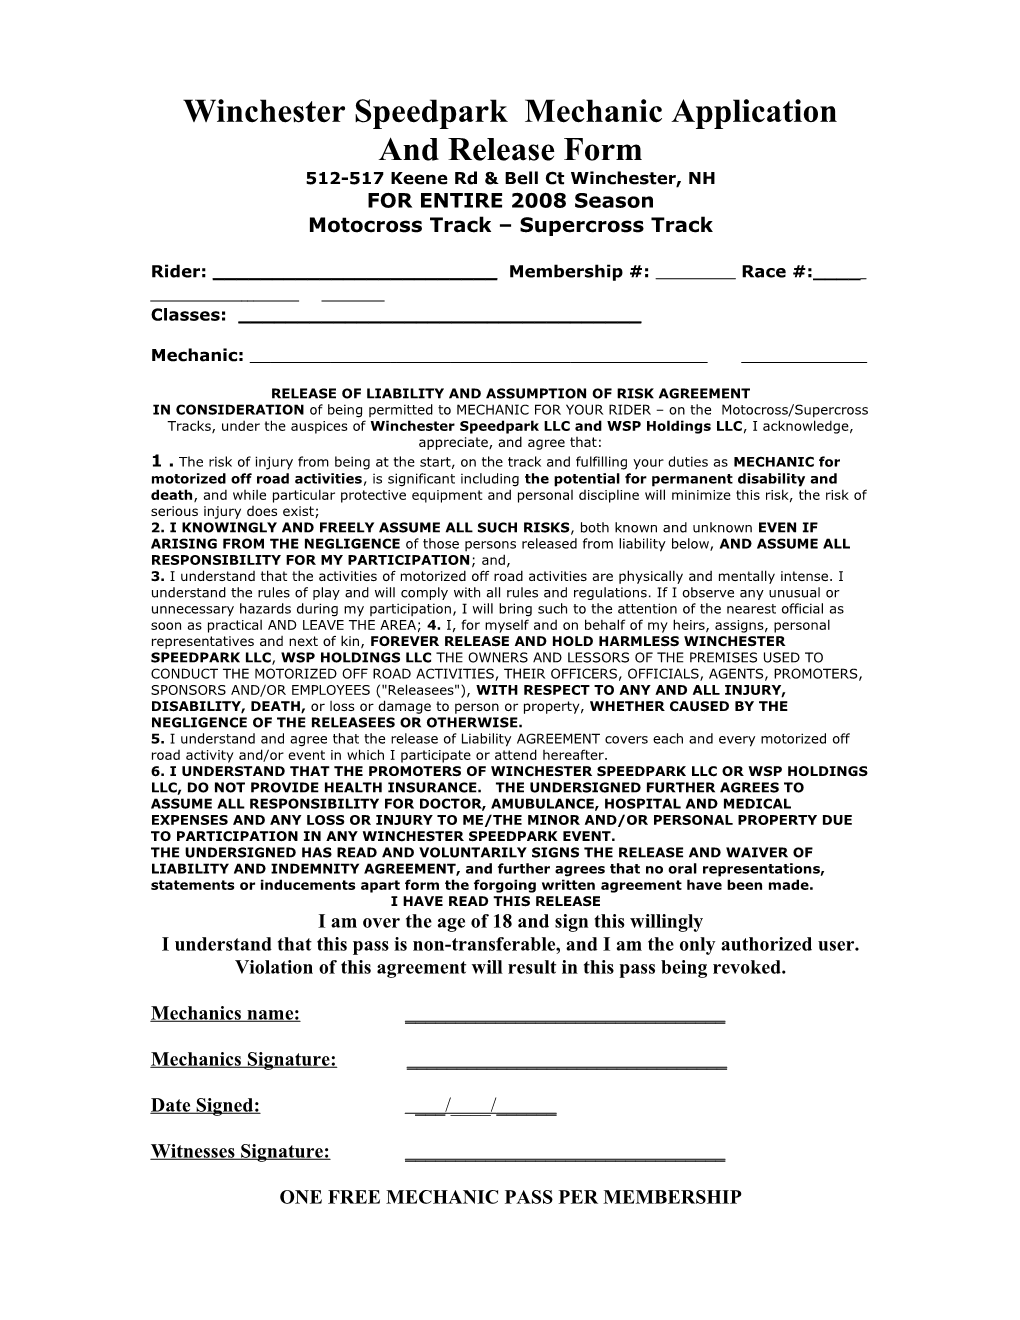 Winchester Speedpark Mechanic Release Form